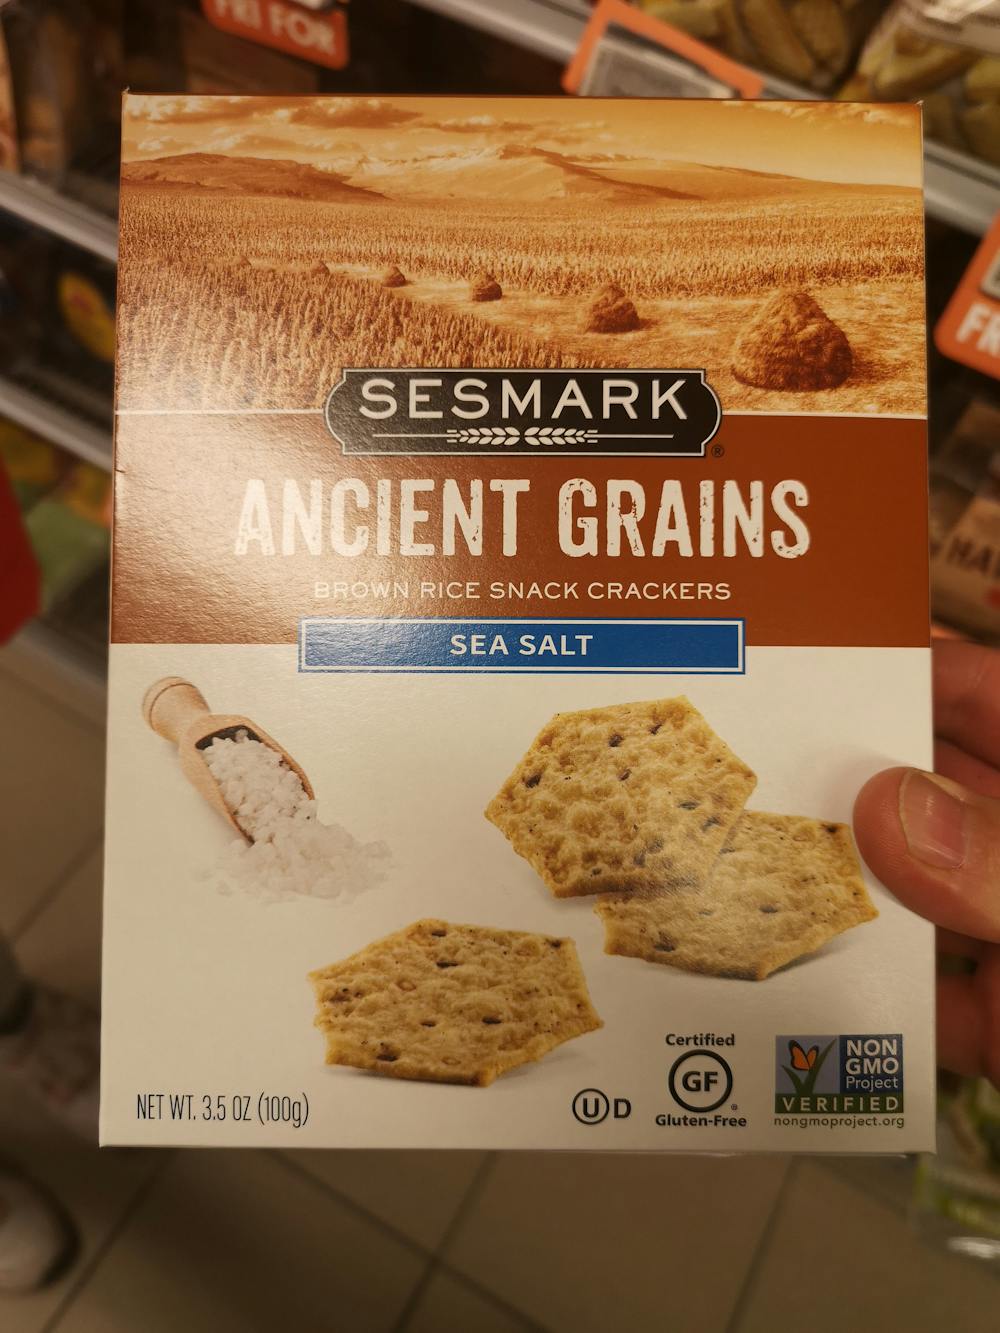 CrAncient grains brown rice snack crackers sea salt , Sesmark